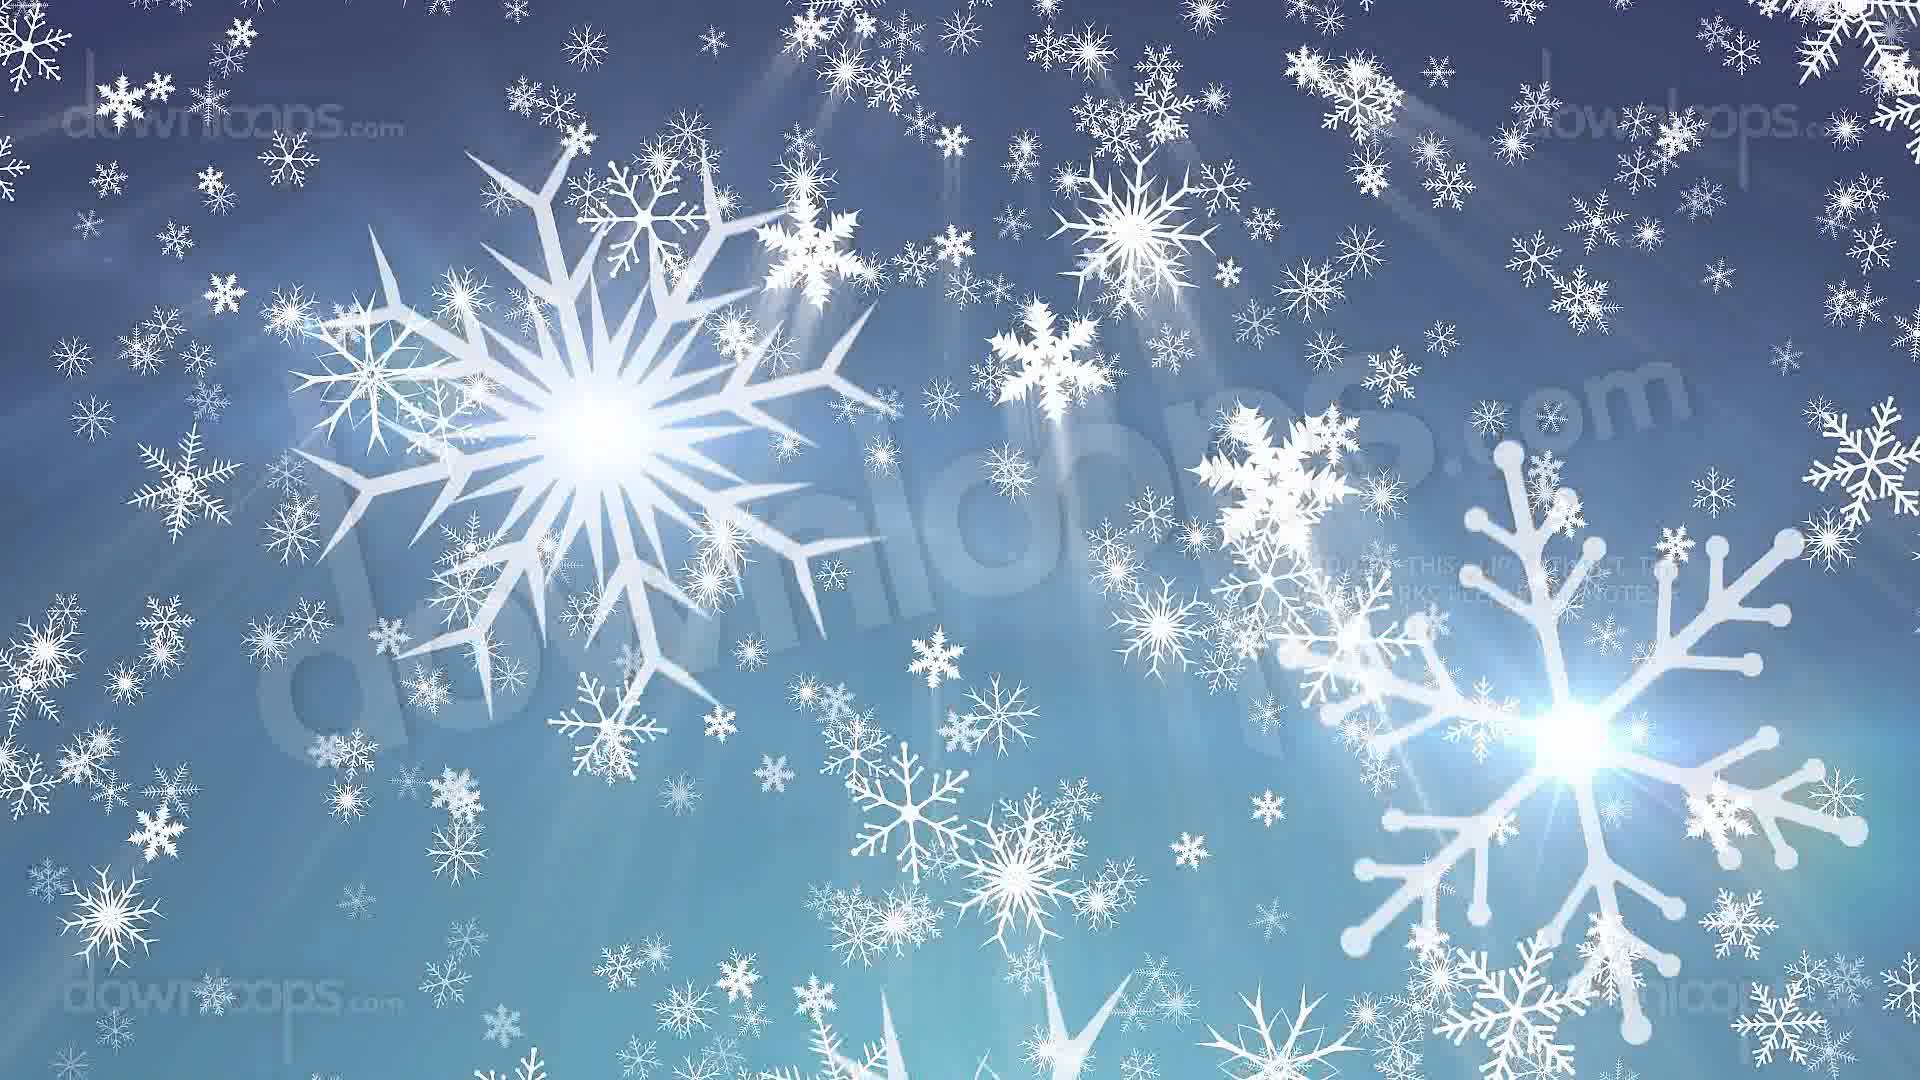 Animated snowflake wallpaper